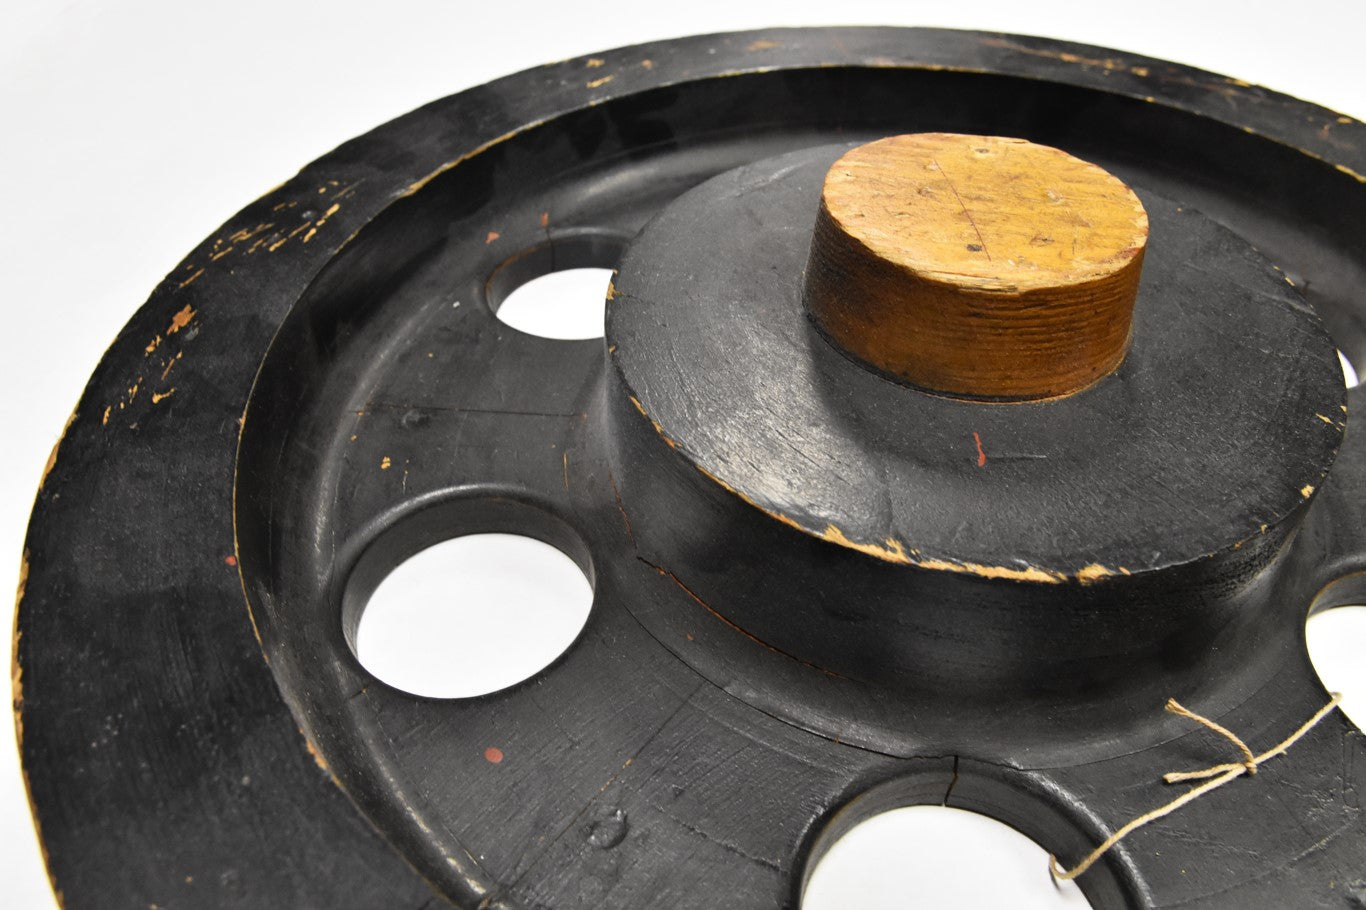 Antique Factory Foundry Wheel Mold (18.5" Diameter - 2" Depth)